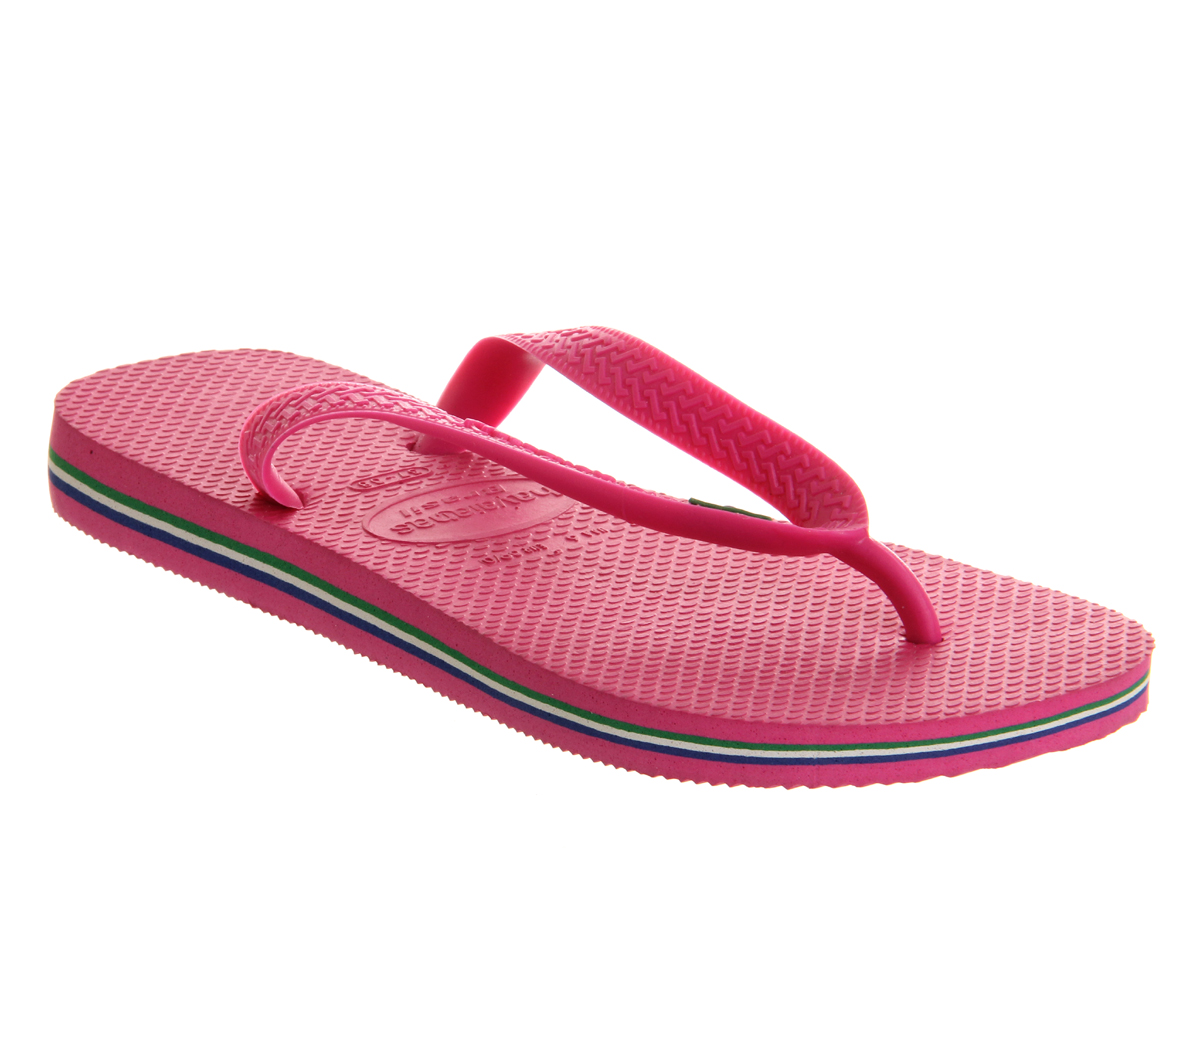 Havaianas Brazil Flip-flop Hot Pink Rubber - Women’s Sandals